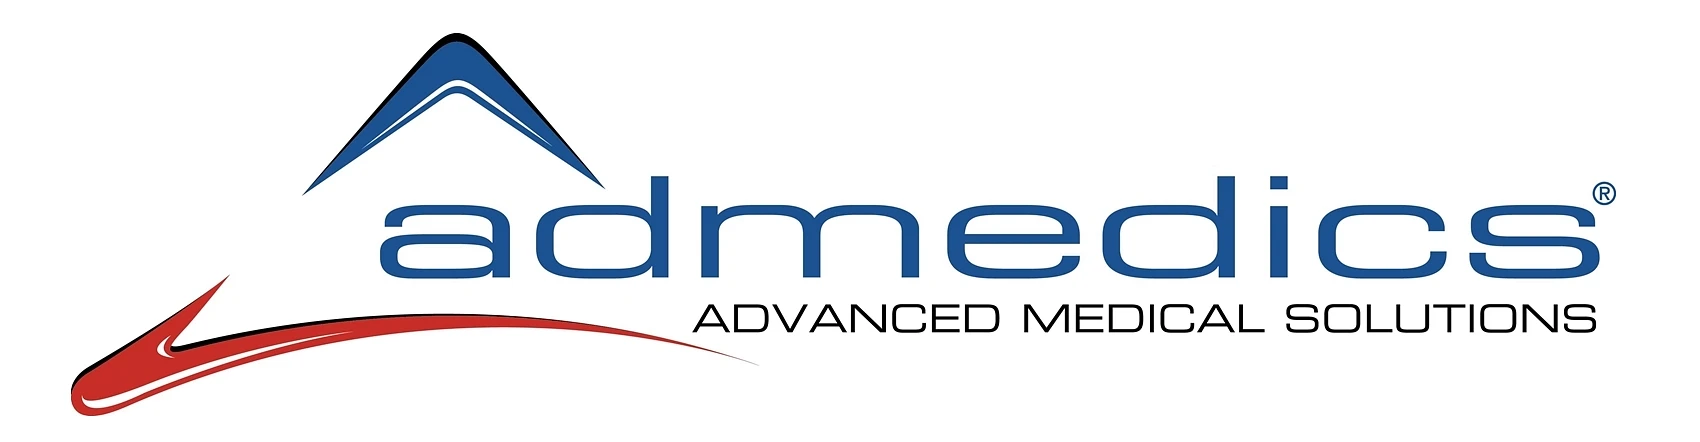 ADMEDICS Advanced Medical Solutions AG